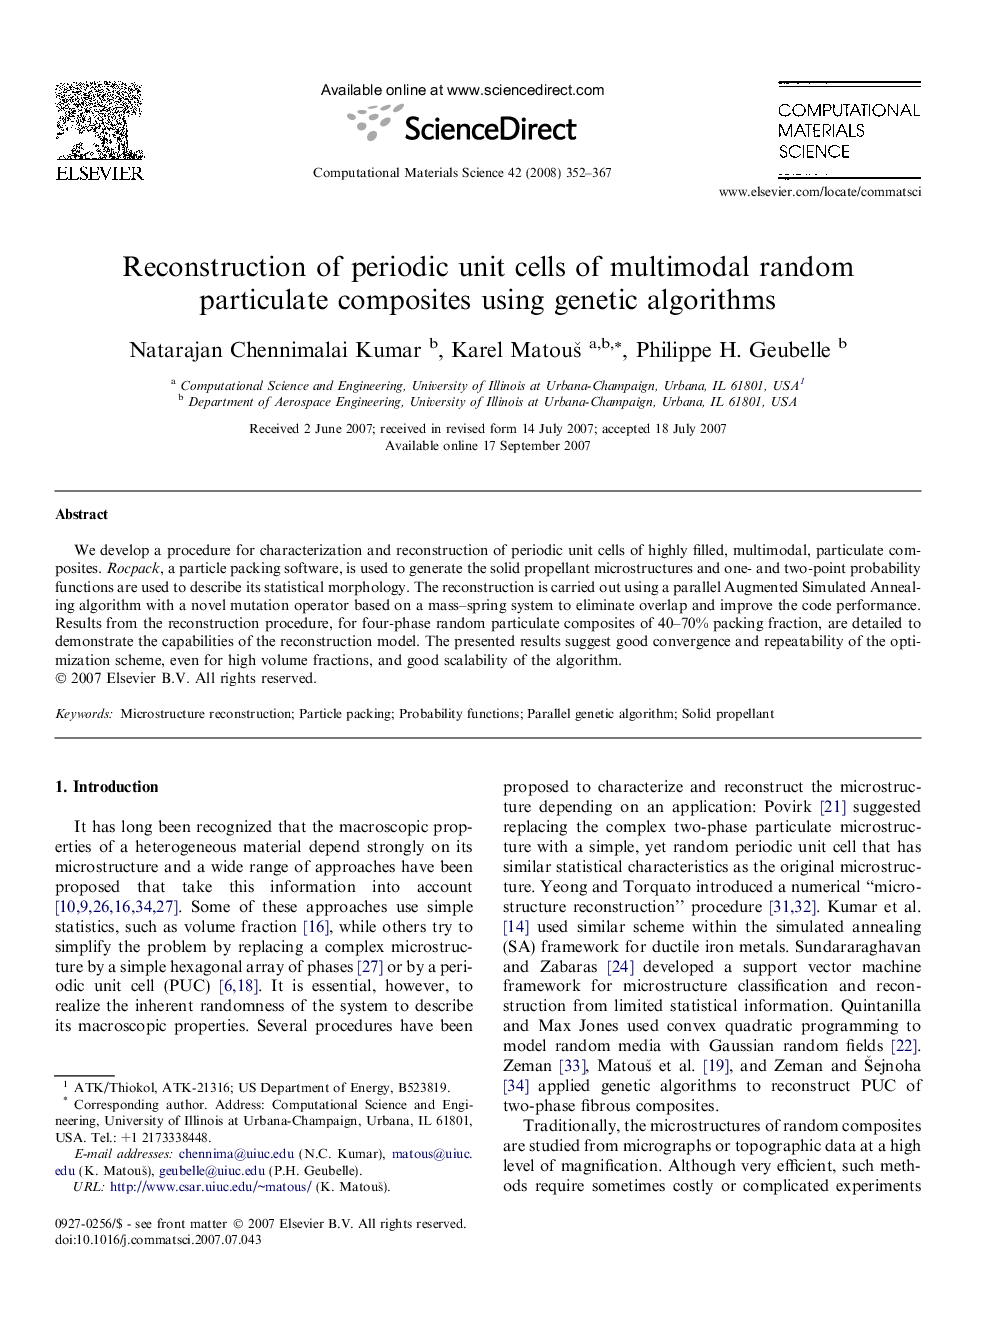 Reconstruction of periodic unit cells of multimodal random particulate composites using genetic algorithms